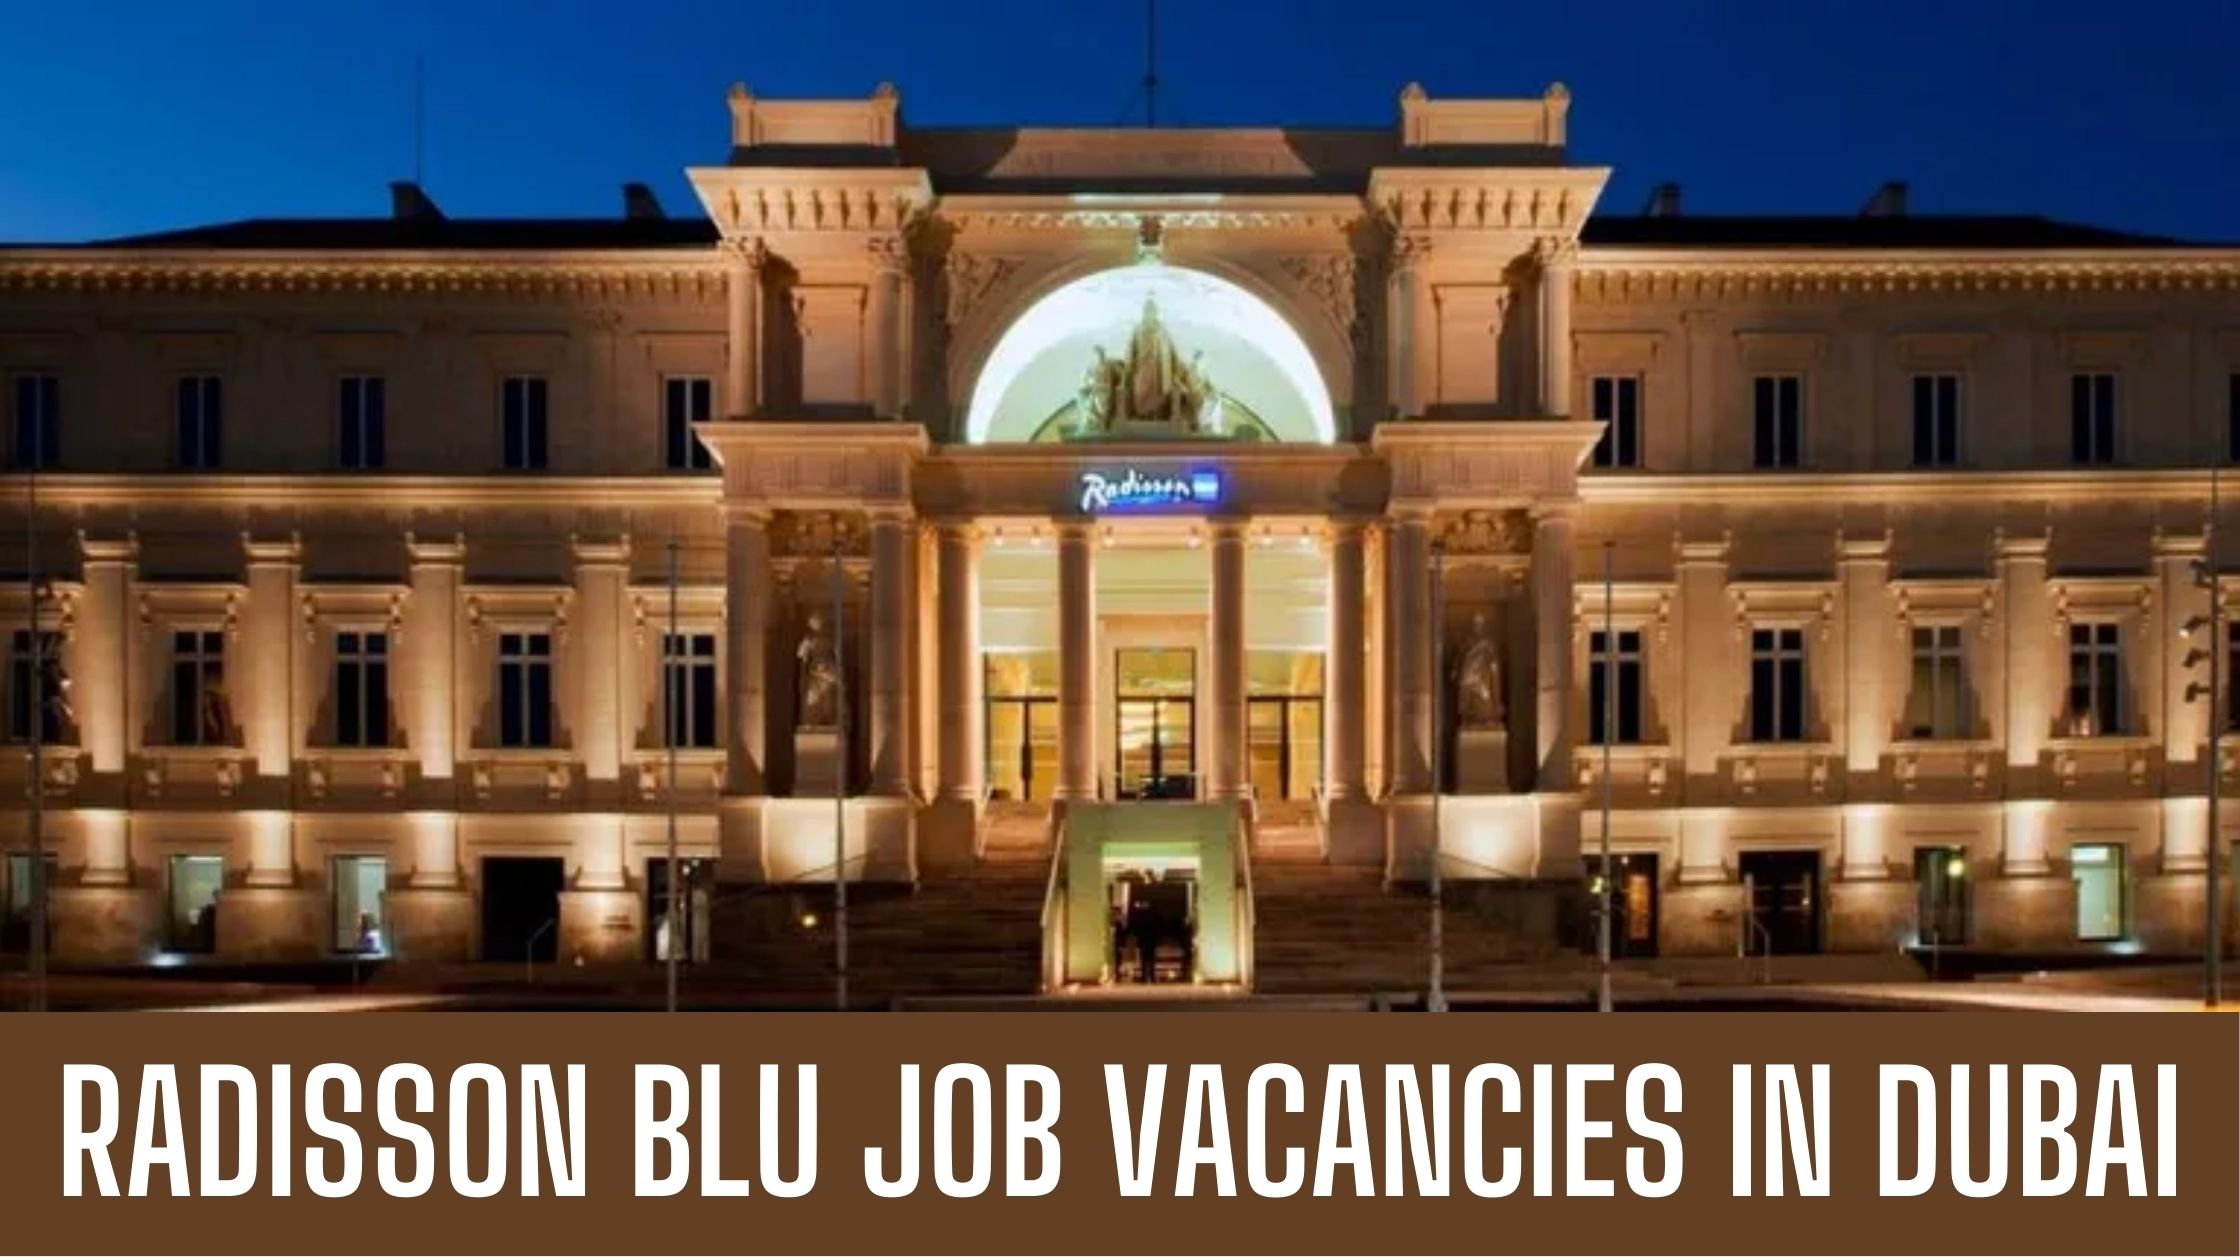 Radisson Blu Hotel Careers In UAE Announced Job Vacancies